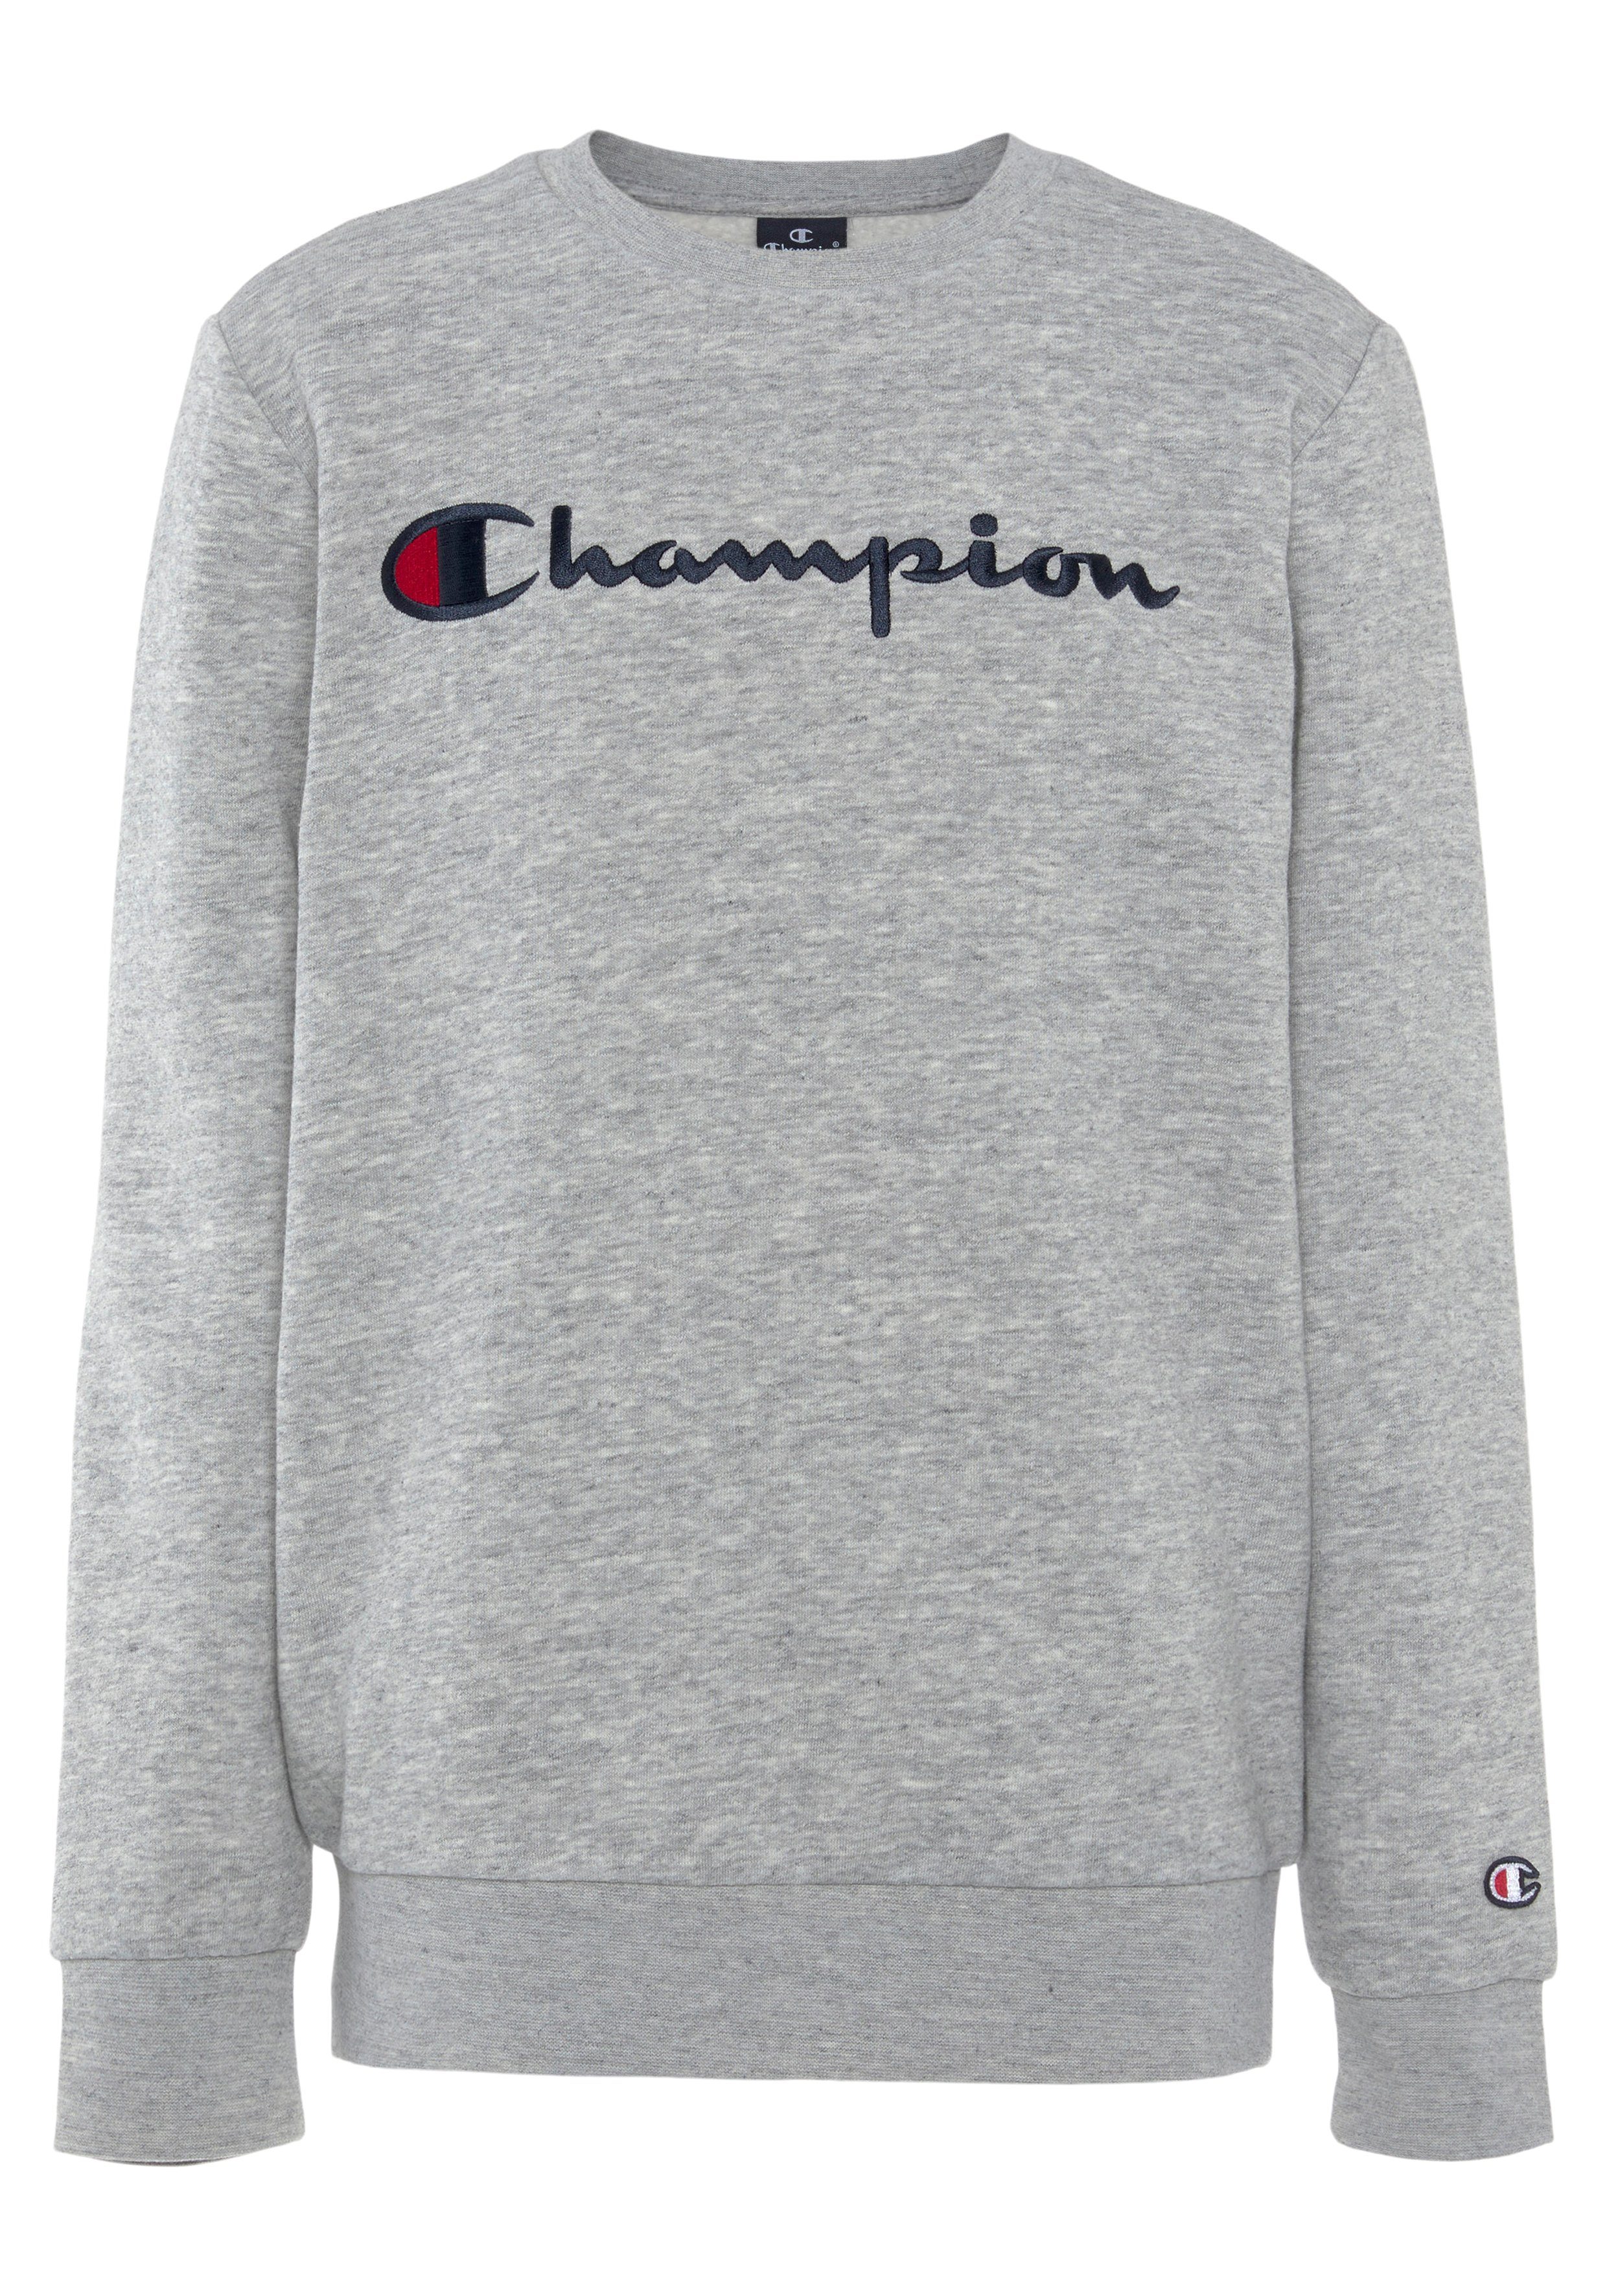 Champion Sweatshirt Classic Crewneck Sweatshirt large Logo - für Kinder hellgrau mel